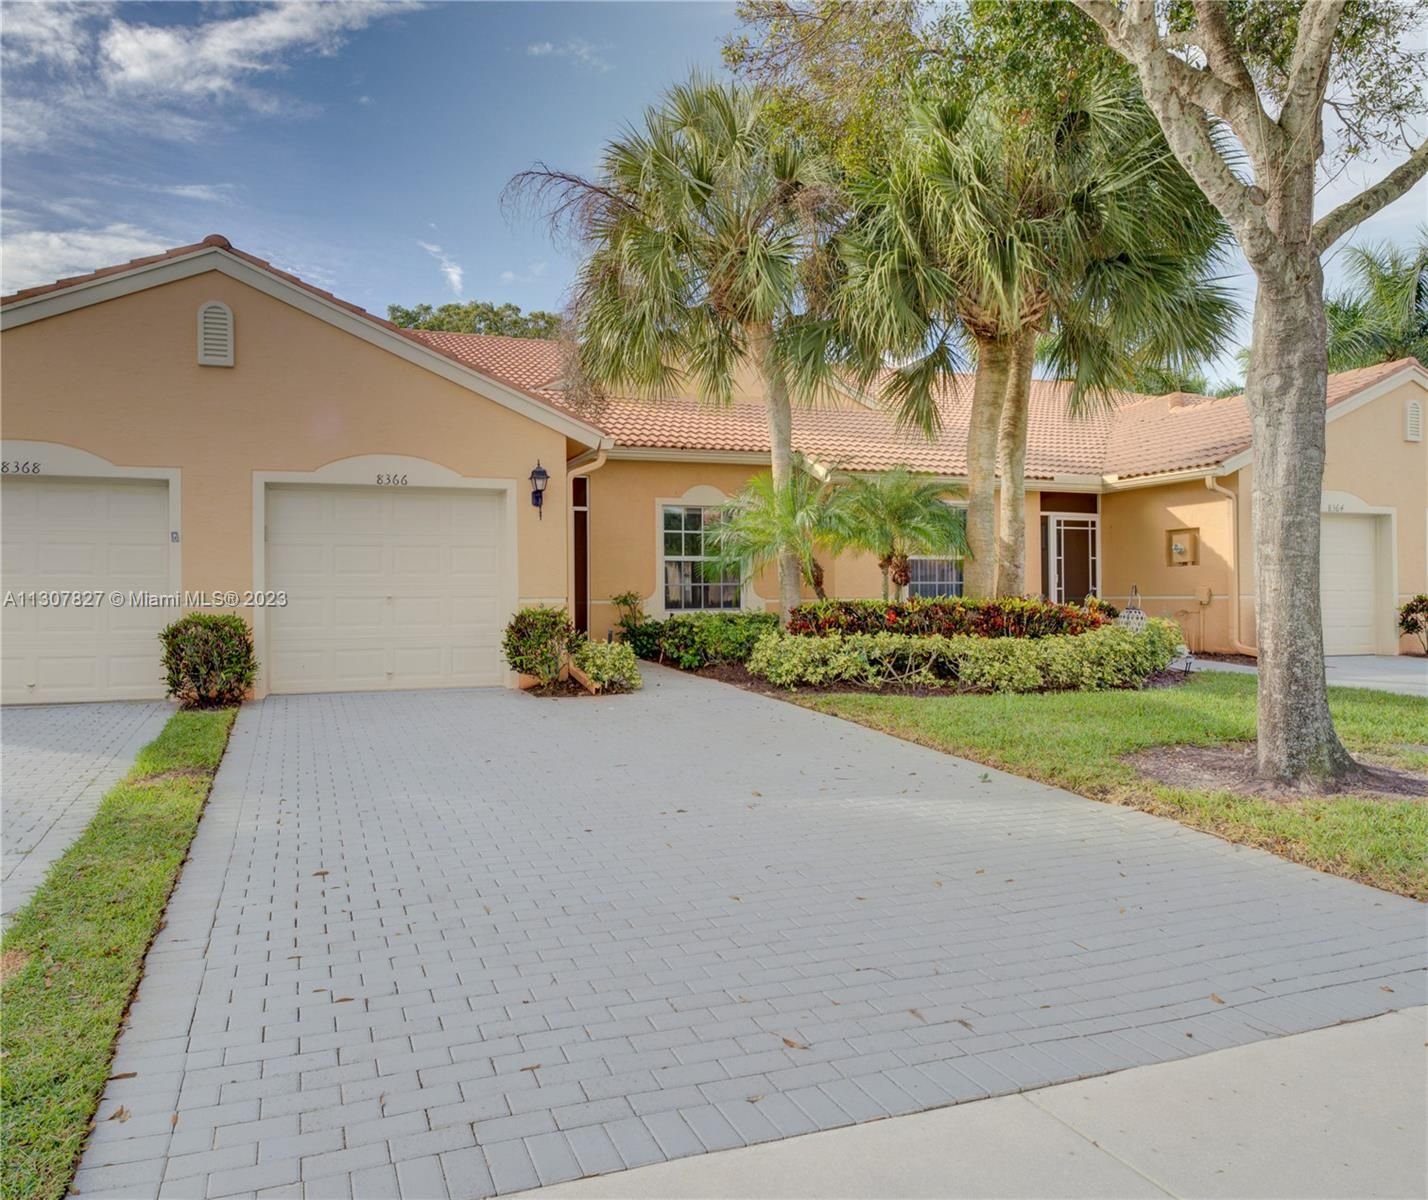 Real estate property located at 8366 Logia Cir #8366, Palm Beach County, Boynton Beach, FL